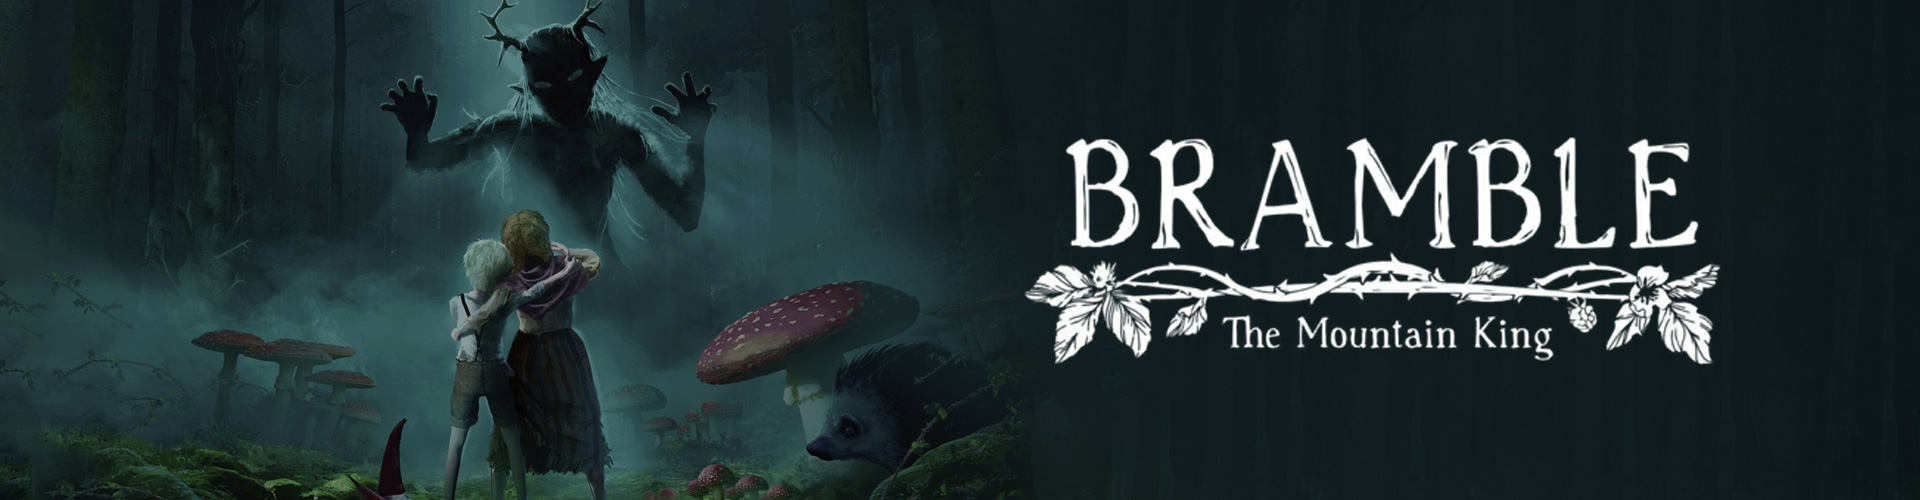 Bramble The Mountain King: un juego de terror de Dark Fantasy con buena trama